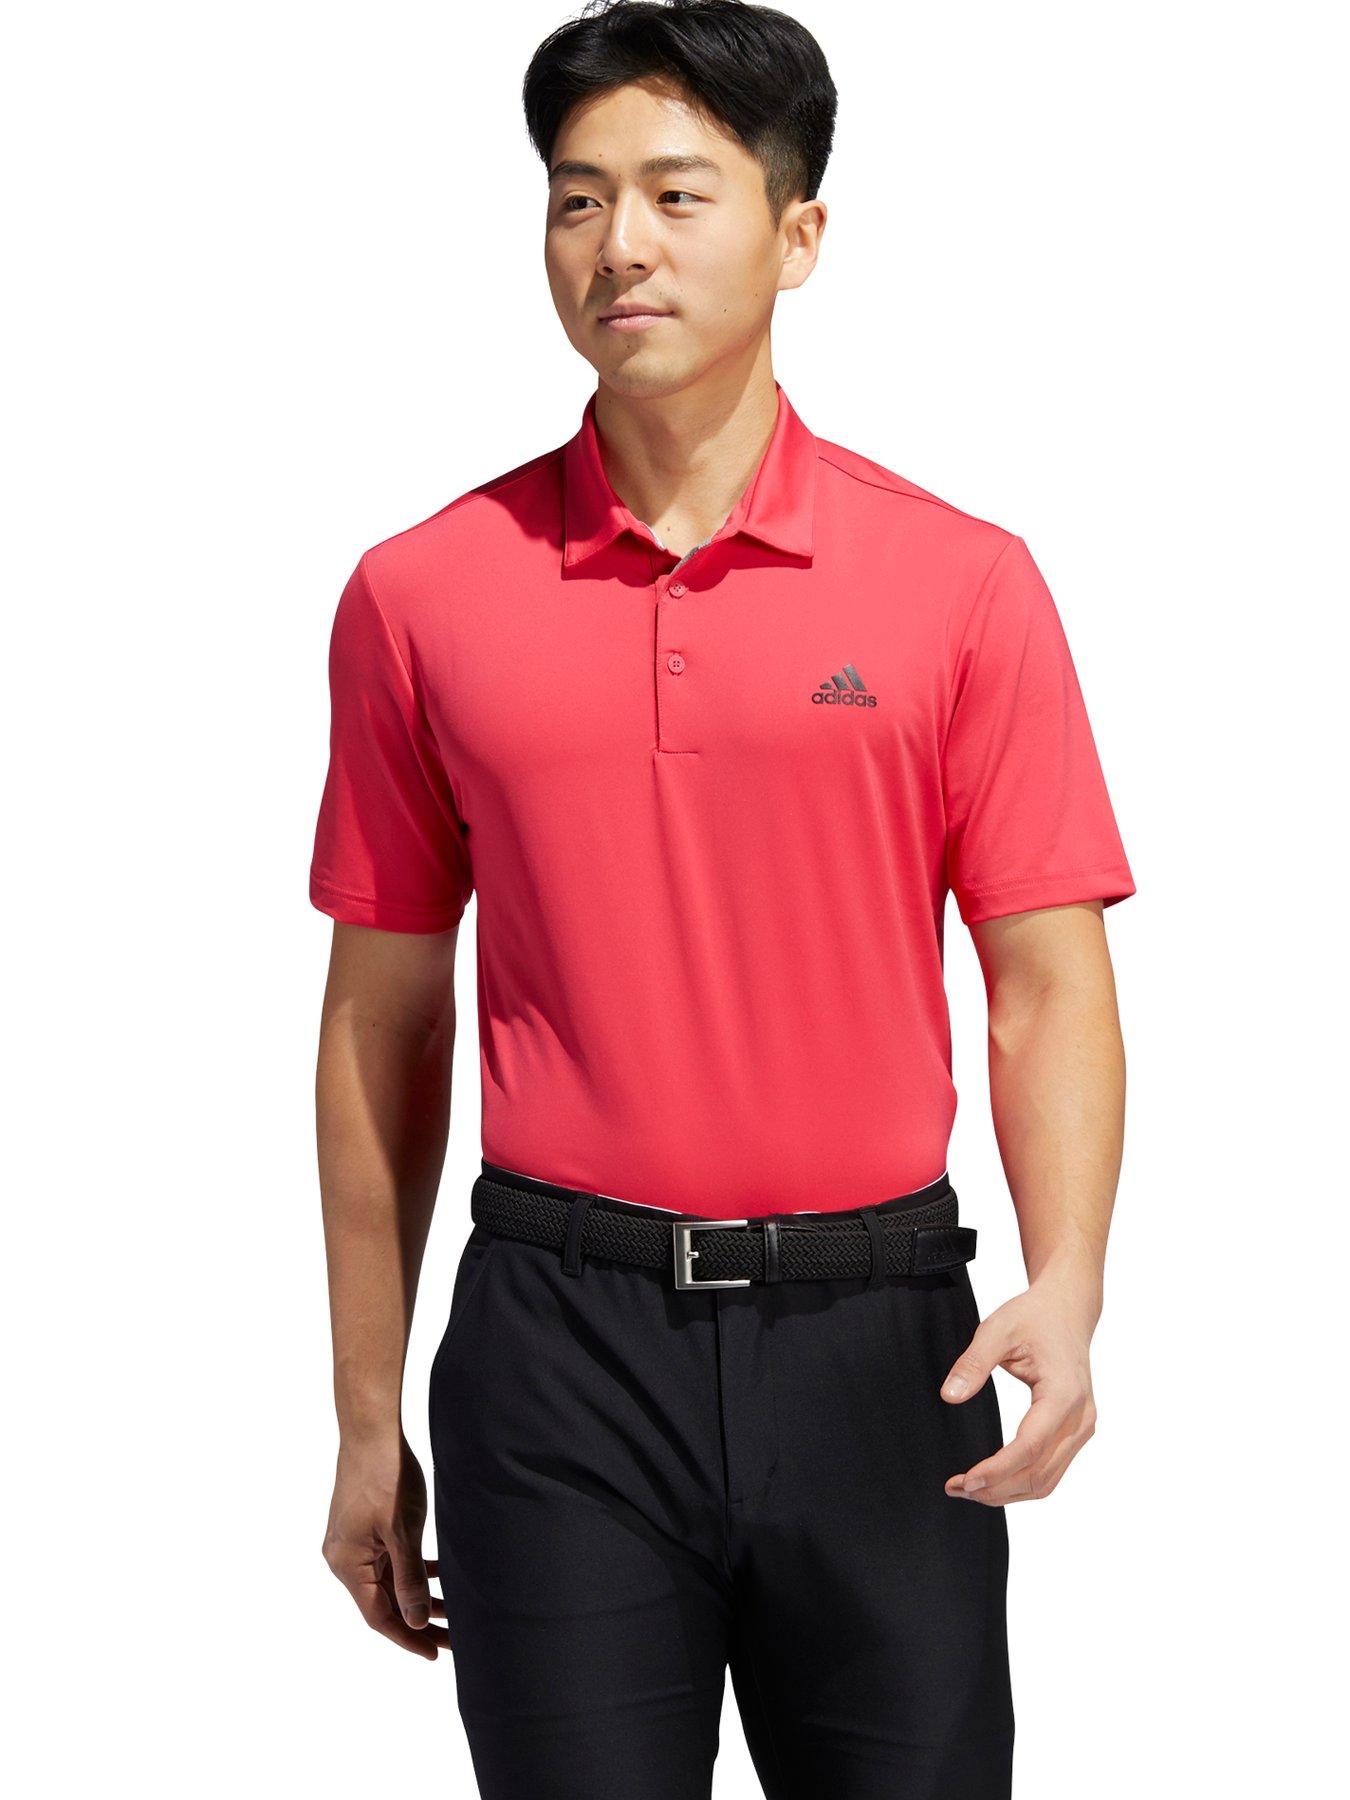 adidas golf ultimate 365 solid polo shirt